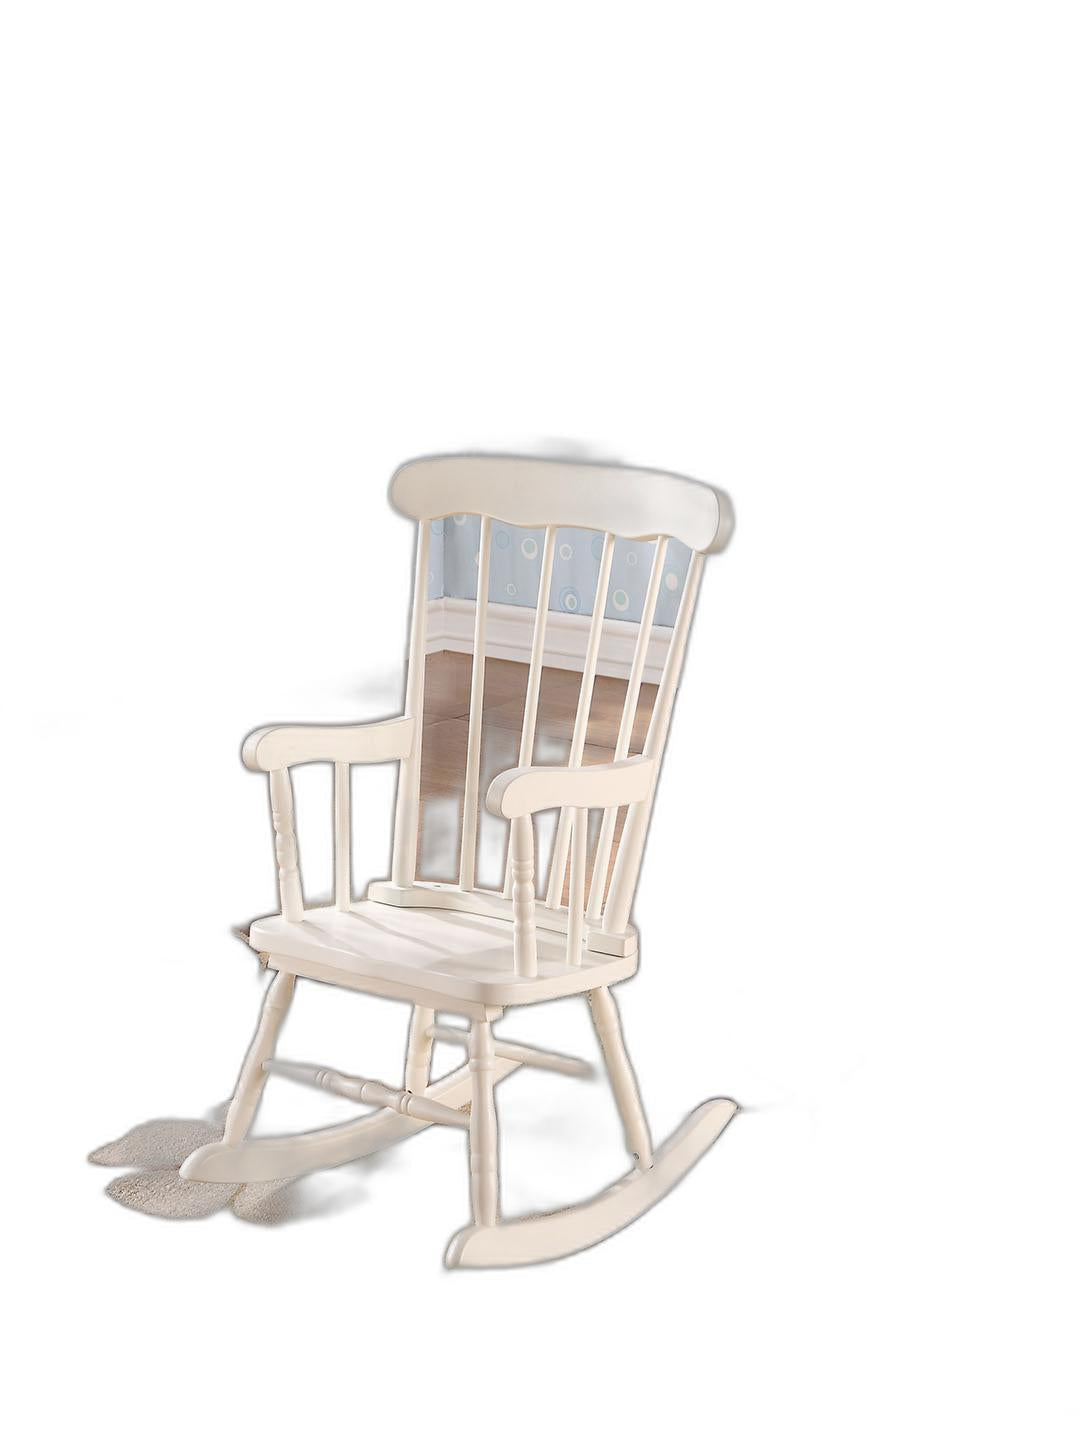 Tall White Wooden Rocking Chair For Children